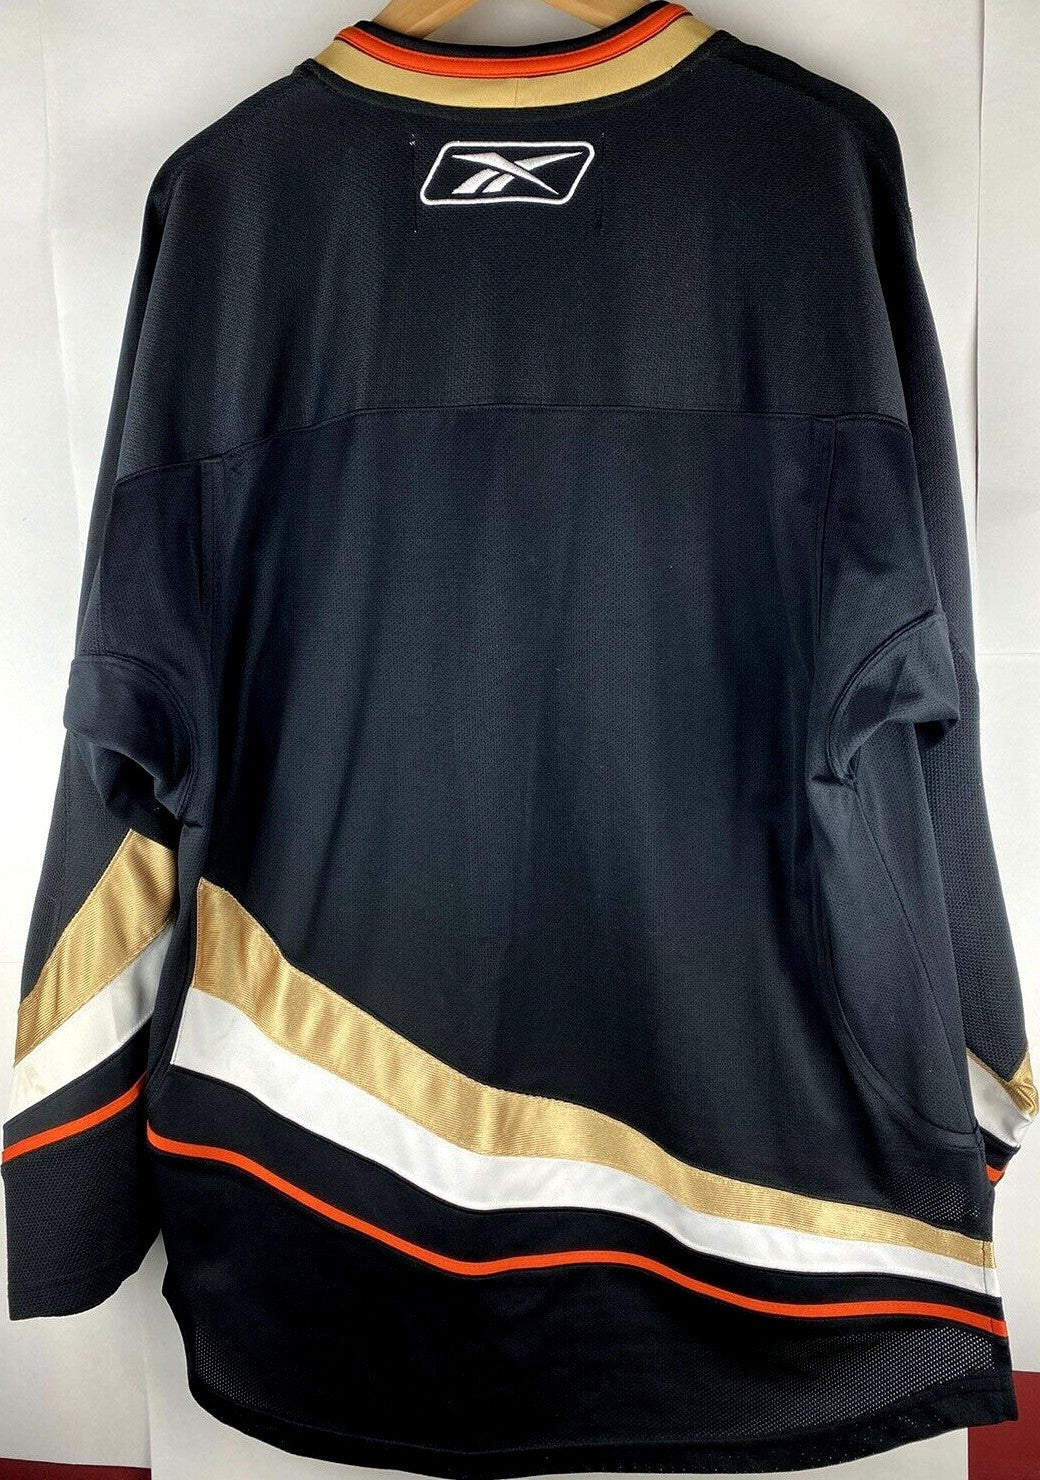 Anaheim Ducks authentic Reebok 2006-07 to 2013-14 style black blank jersey (used)